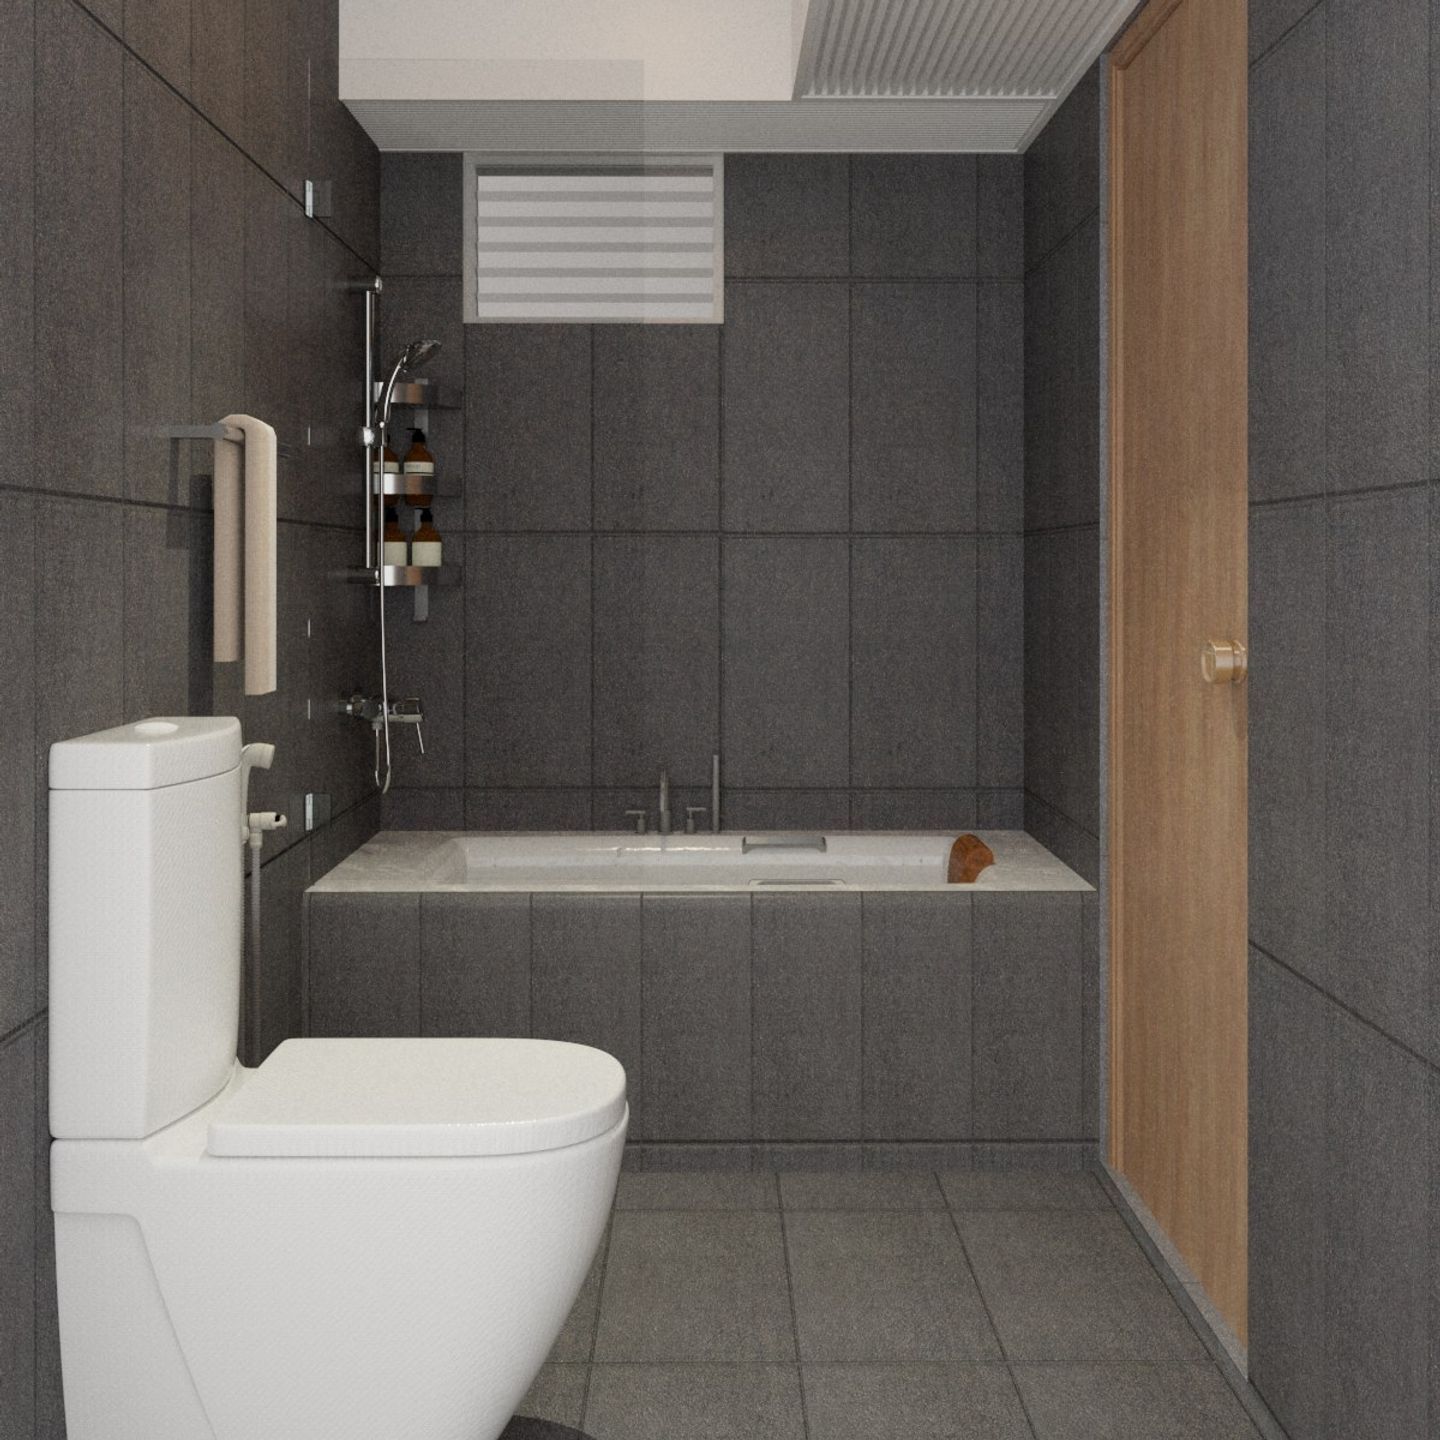 Black And White Bathroom Design - Livspace